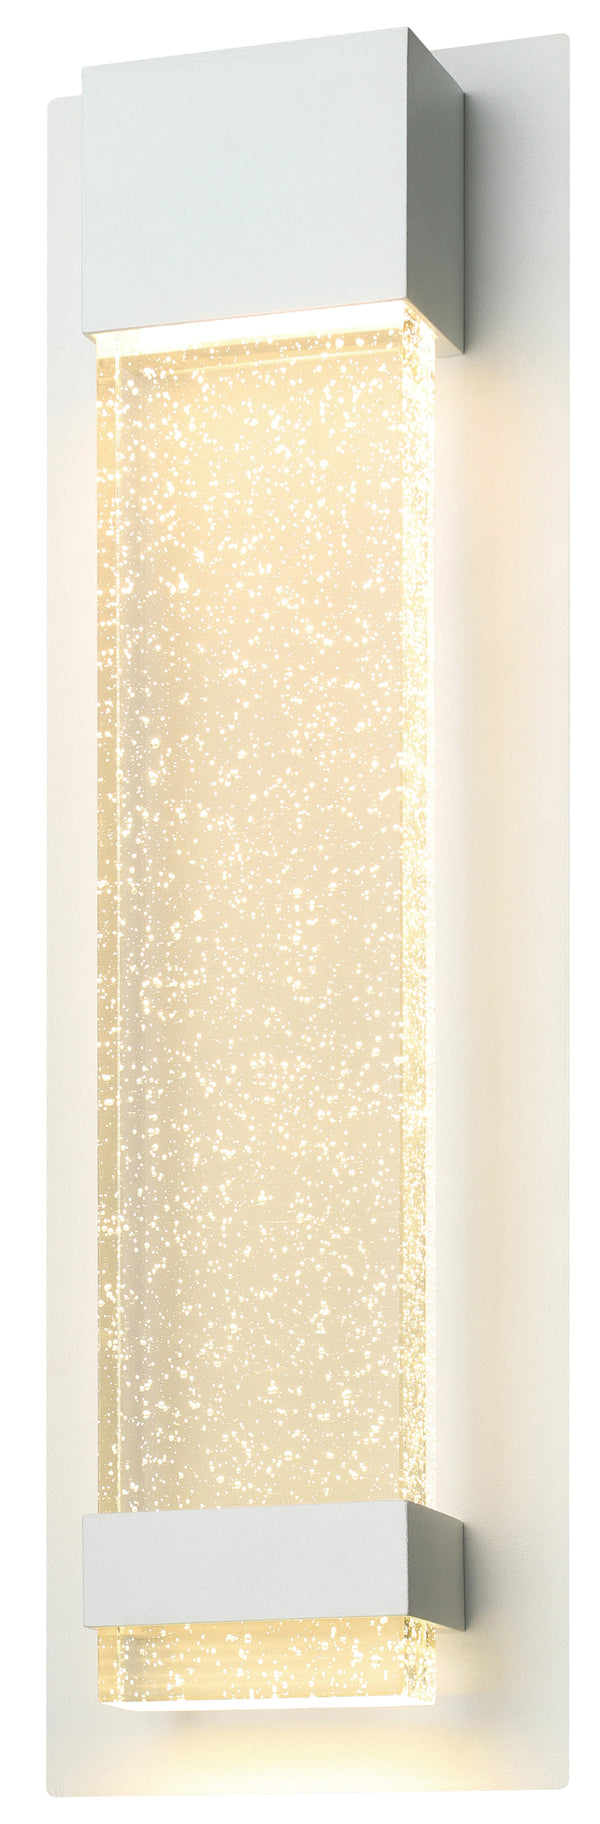 VILLAGRAZIA External Wall Light 6.4W LED White 400mm Large